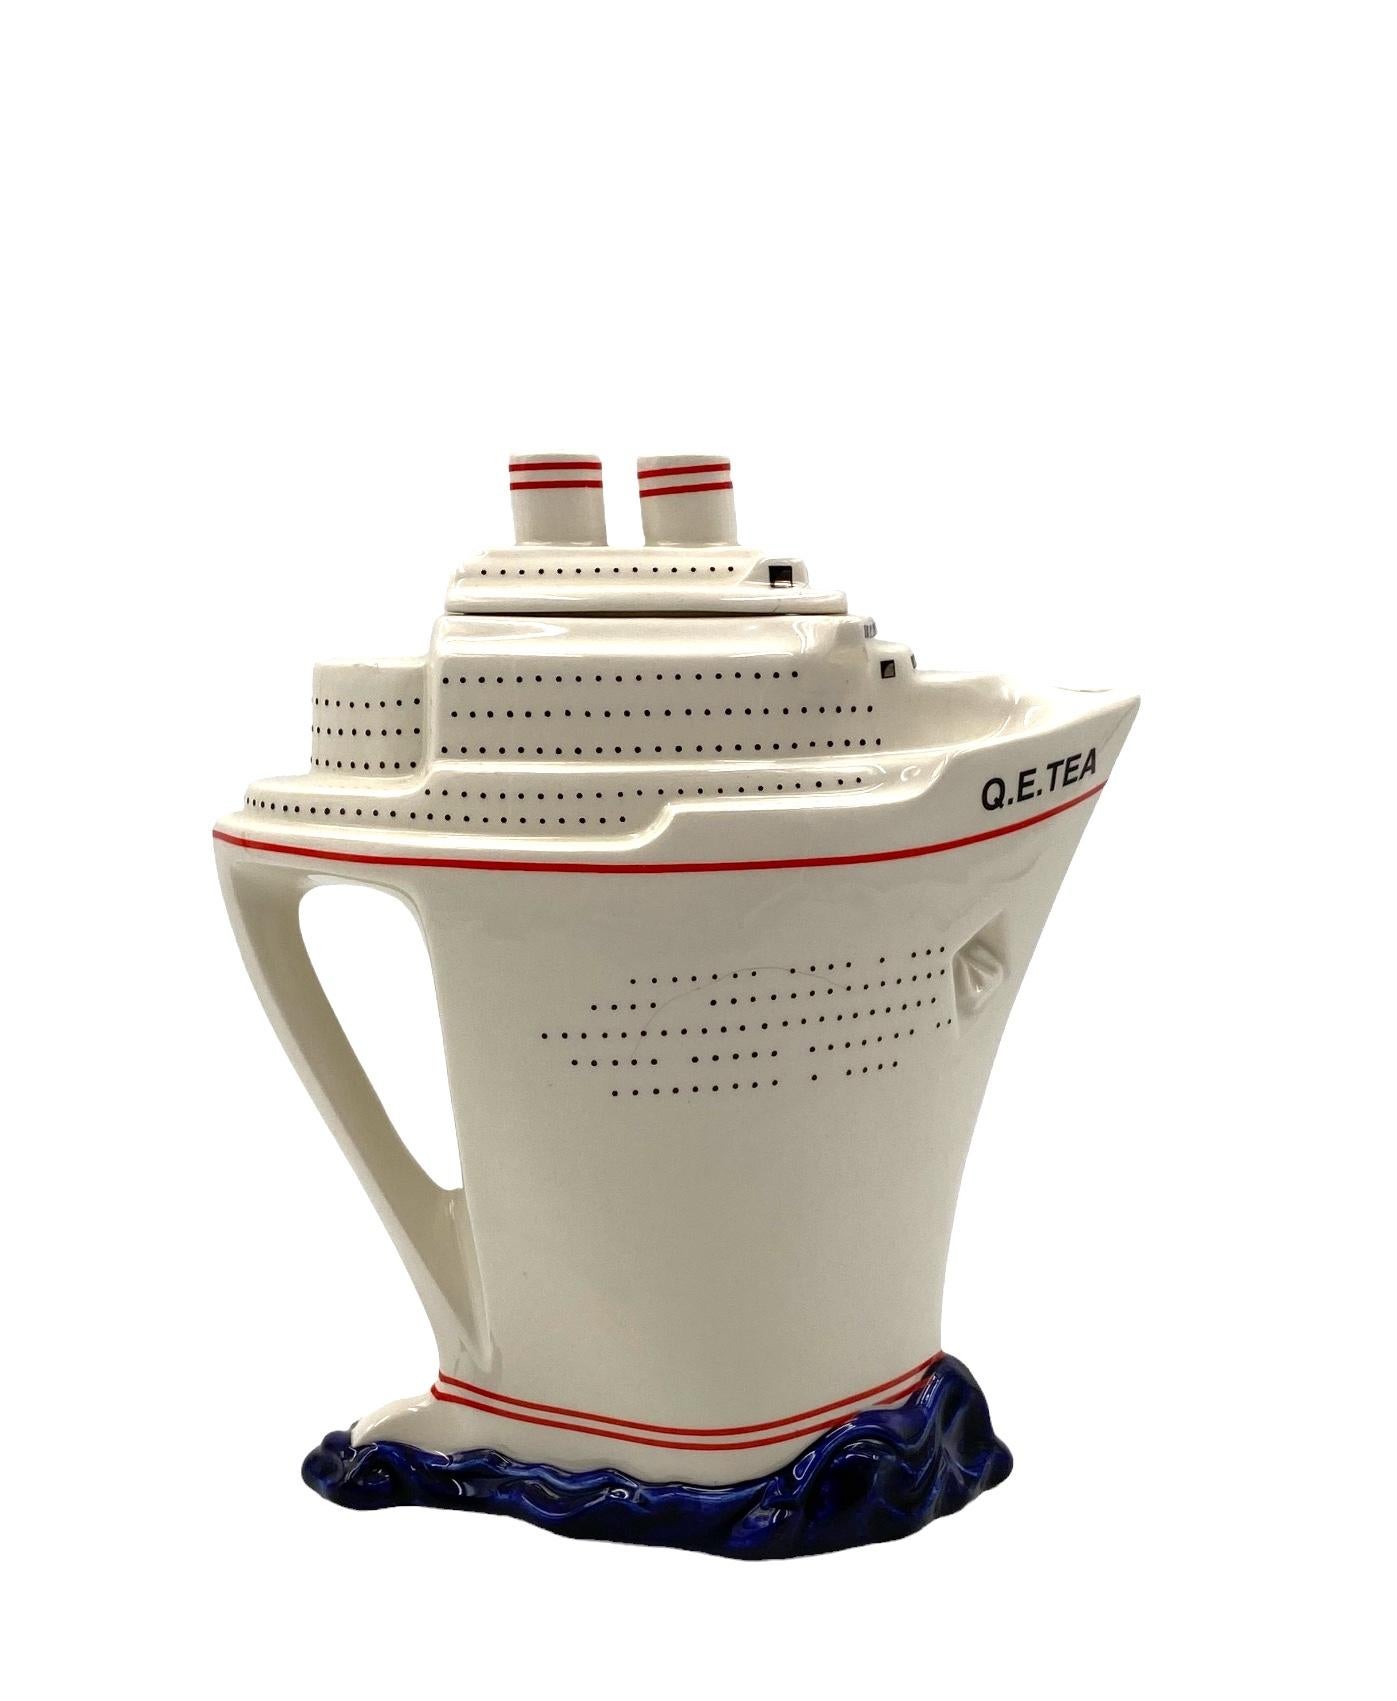 Queen Elizabeth II Cruise Ship Teapot, Paul Cardew, UK, 2000s For Sale 9